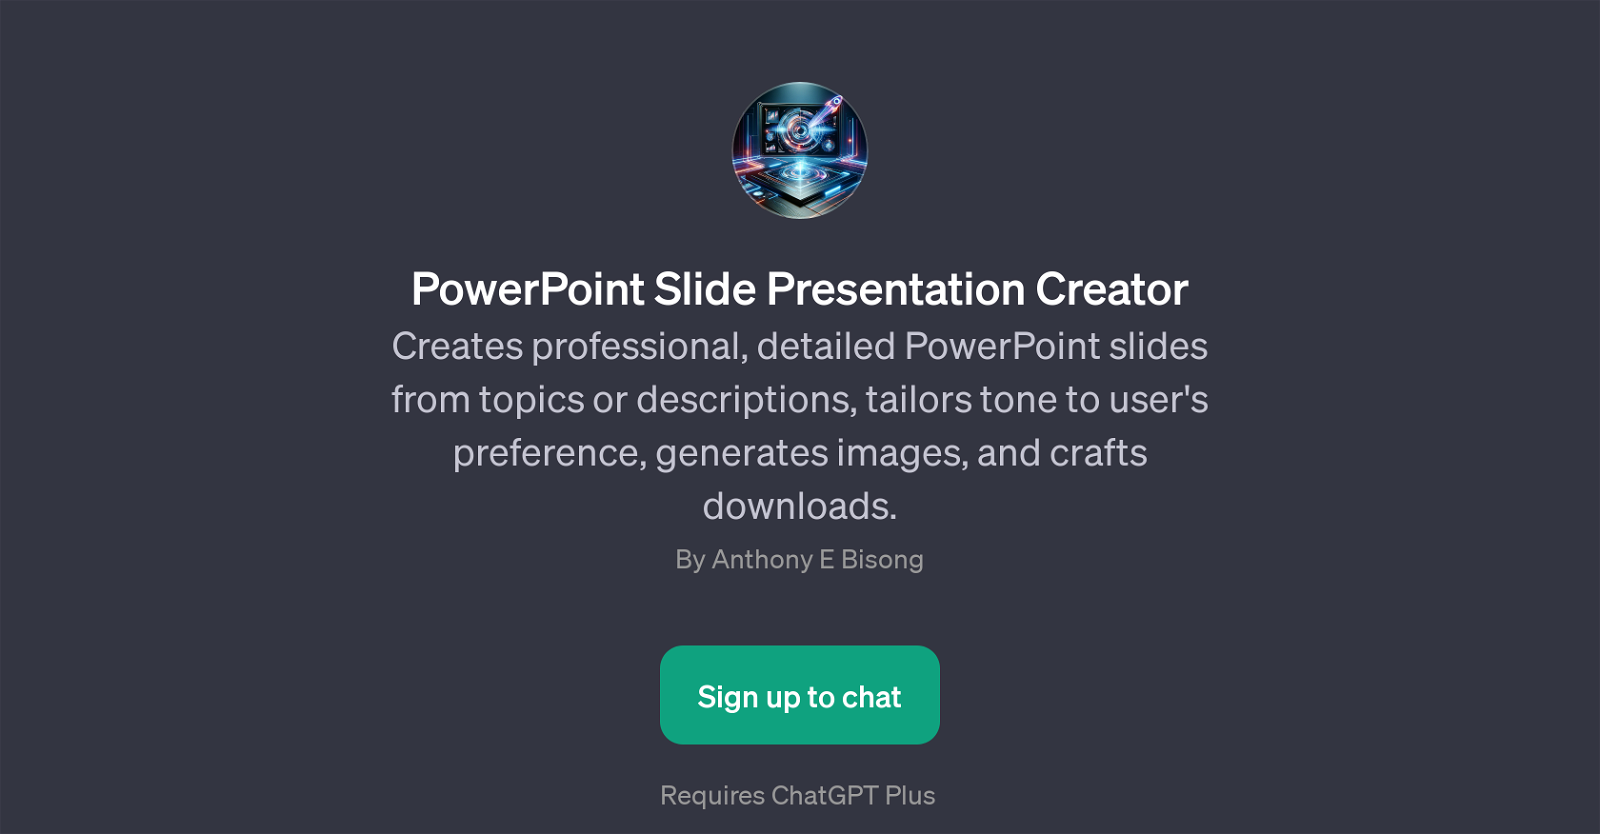 PowerPoint Slide Presentation Creator website